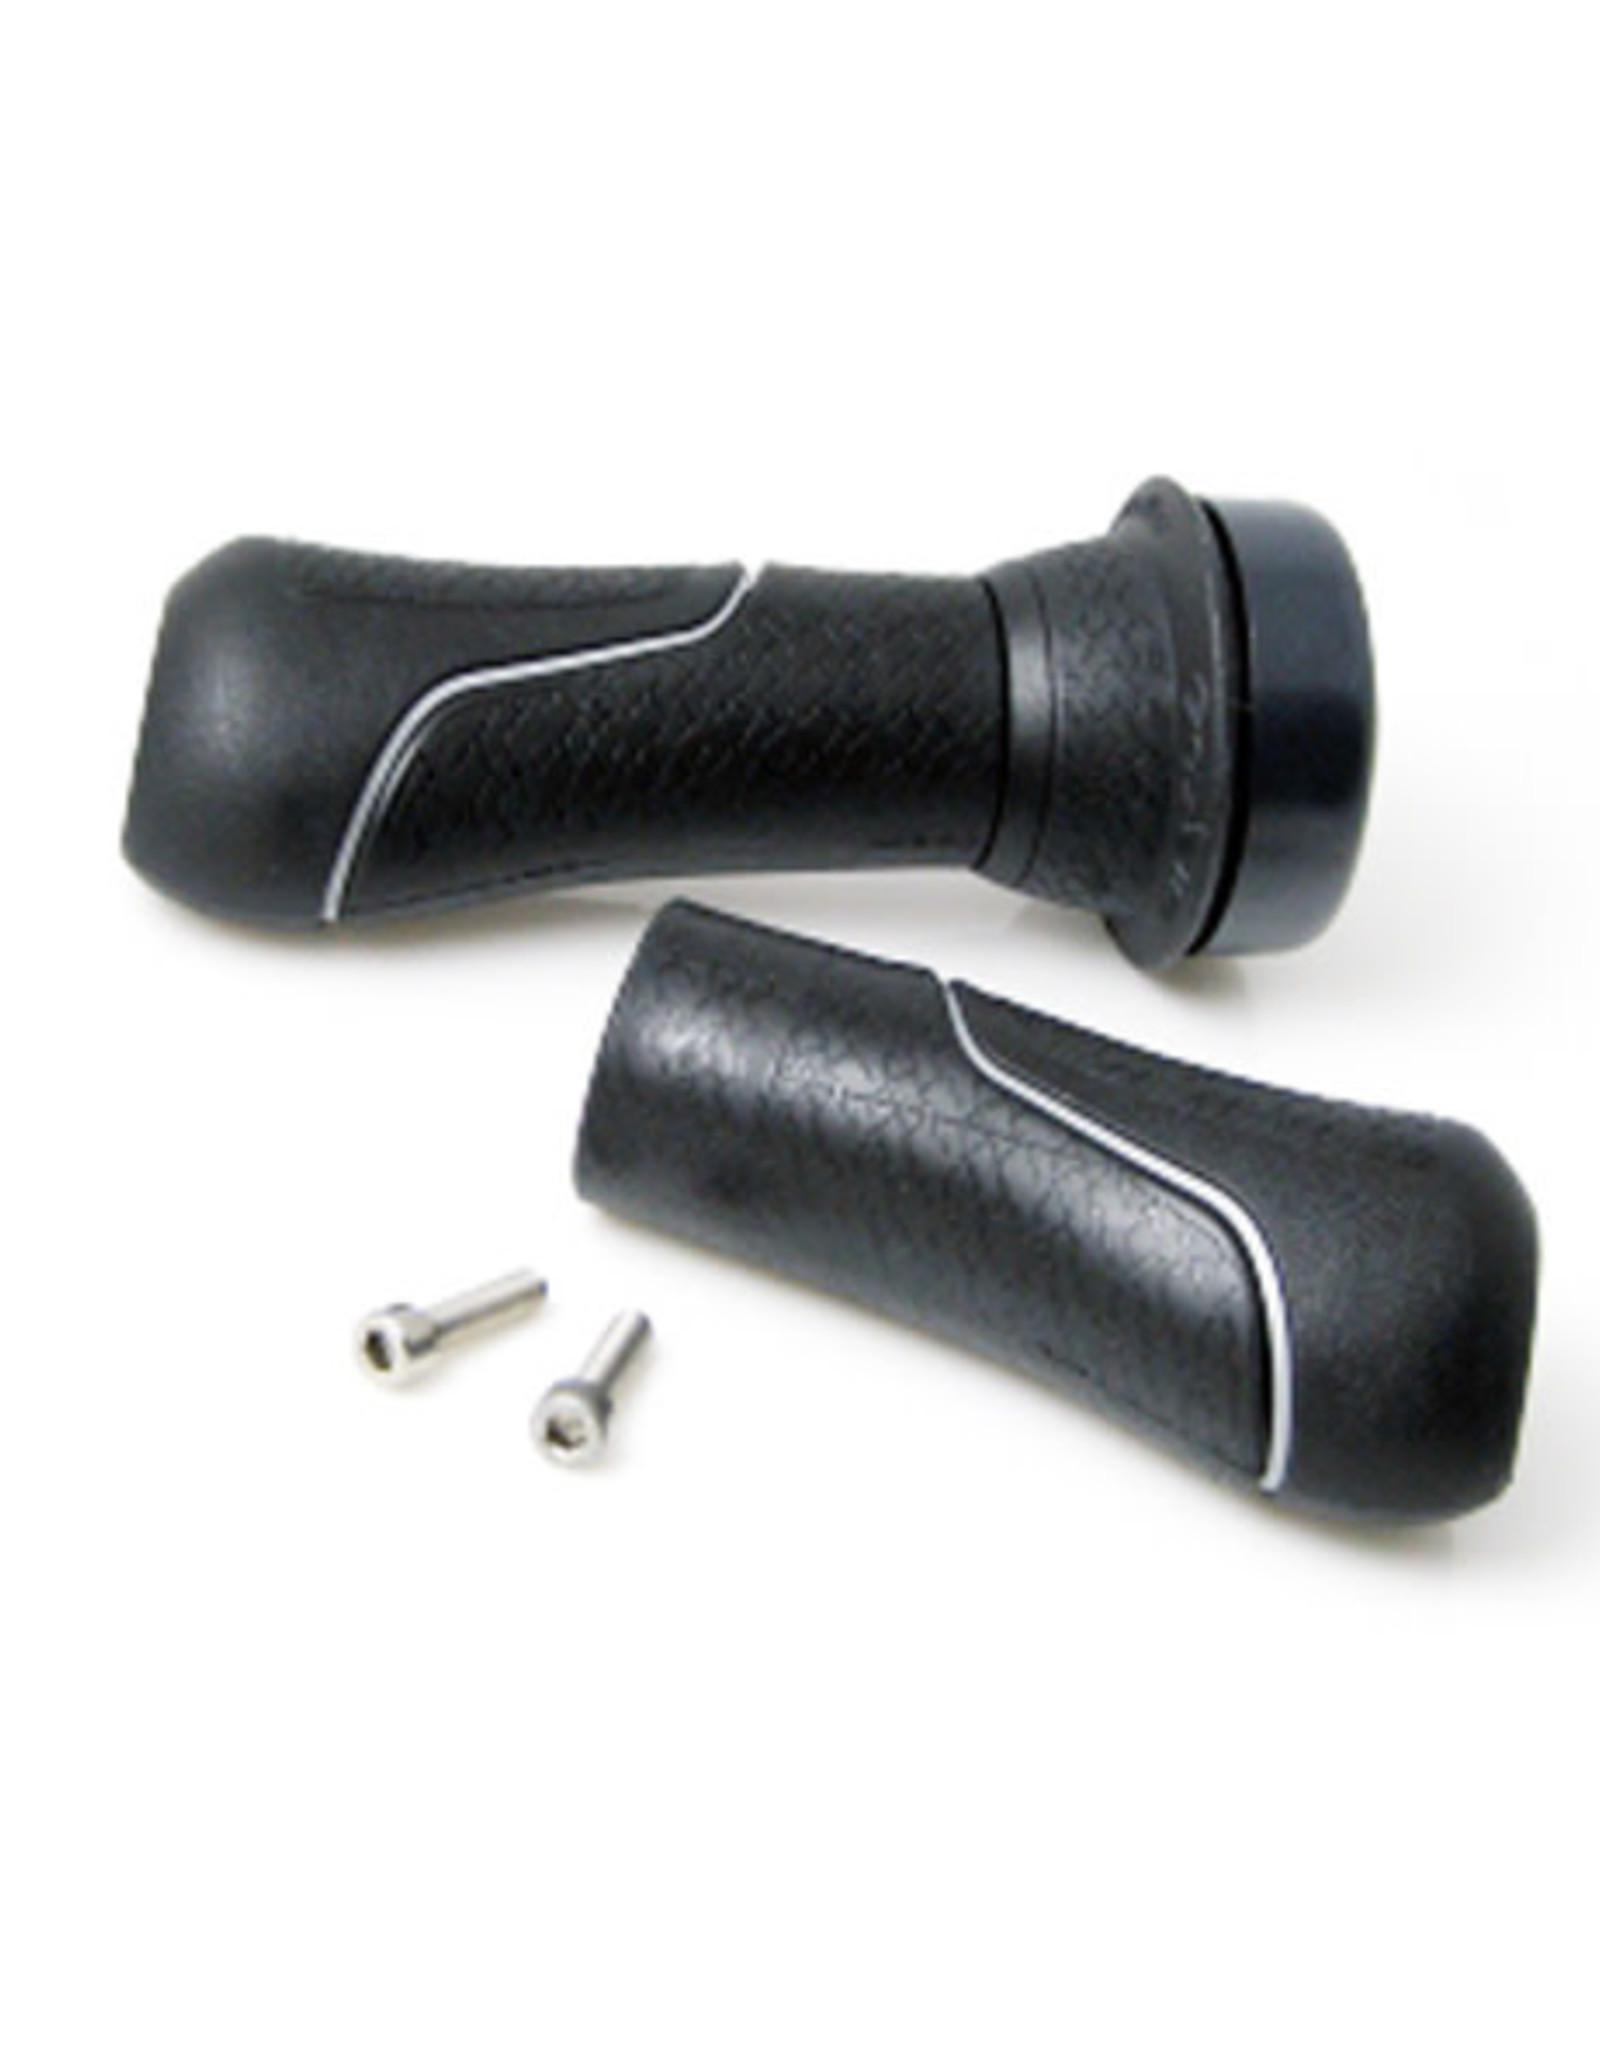 Gazelle Gazelle - Grips - Black w/Silver pin stripe - 22.2mm clamp - Right 105mm / Left 150mm - integrated bell